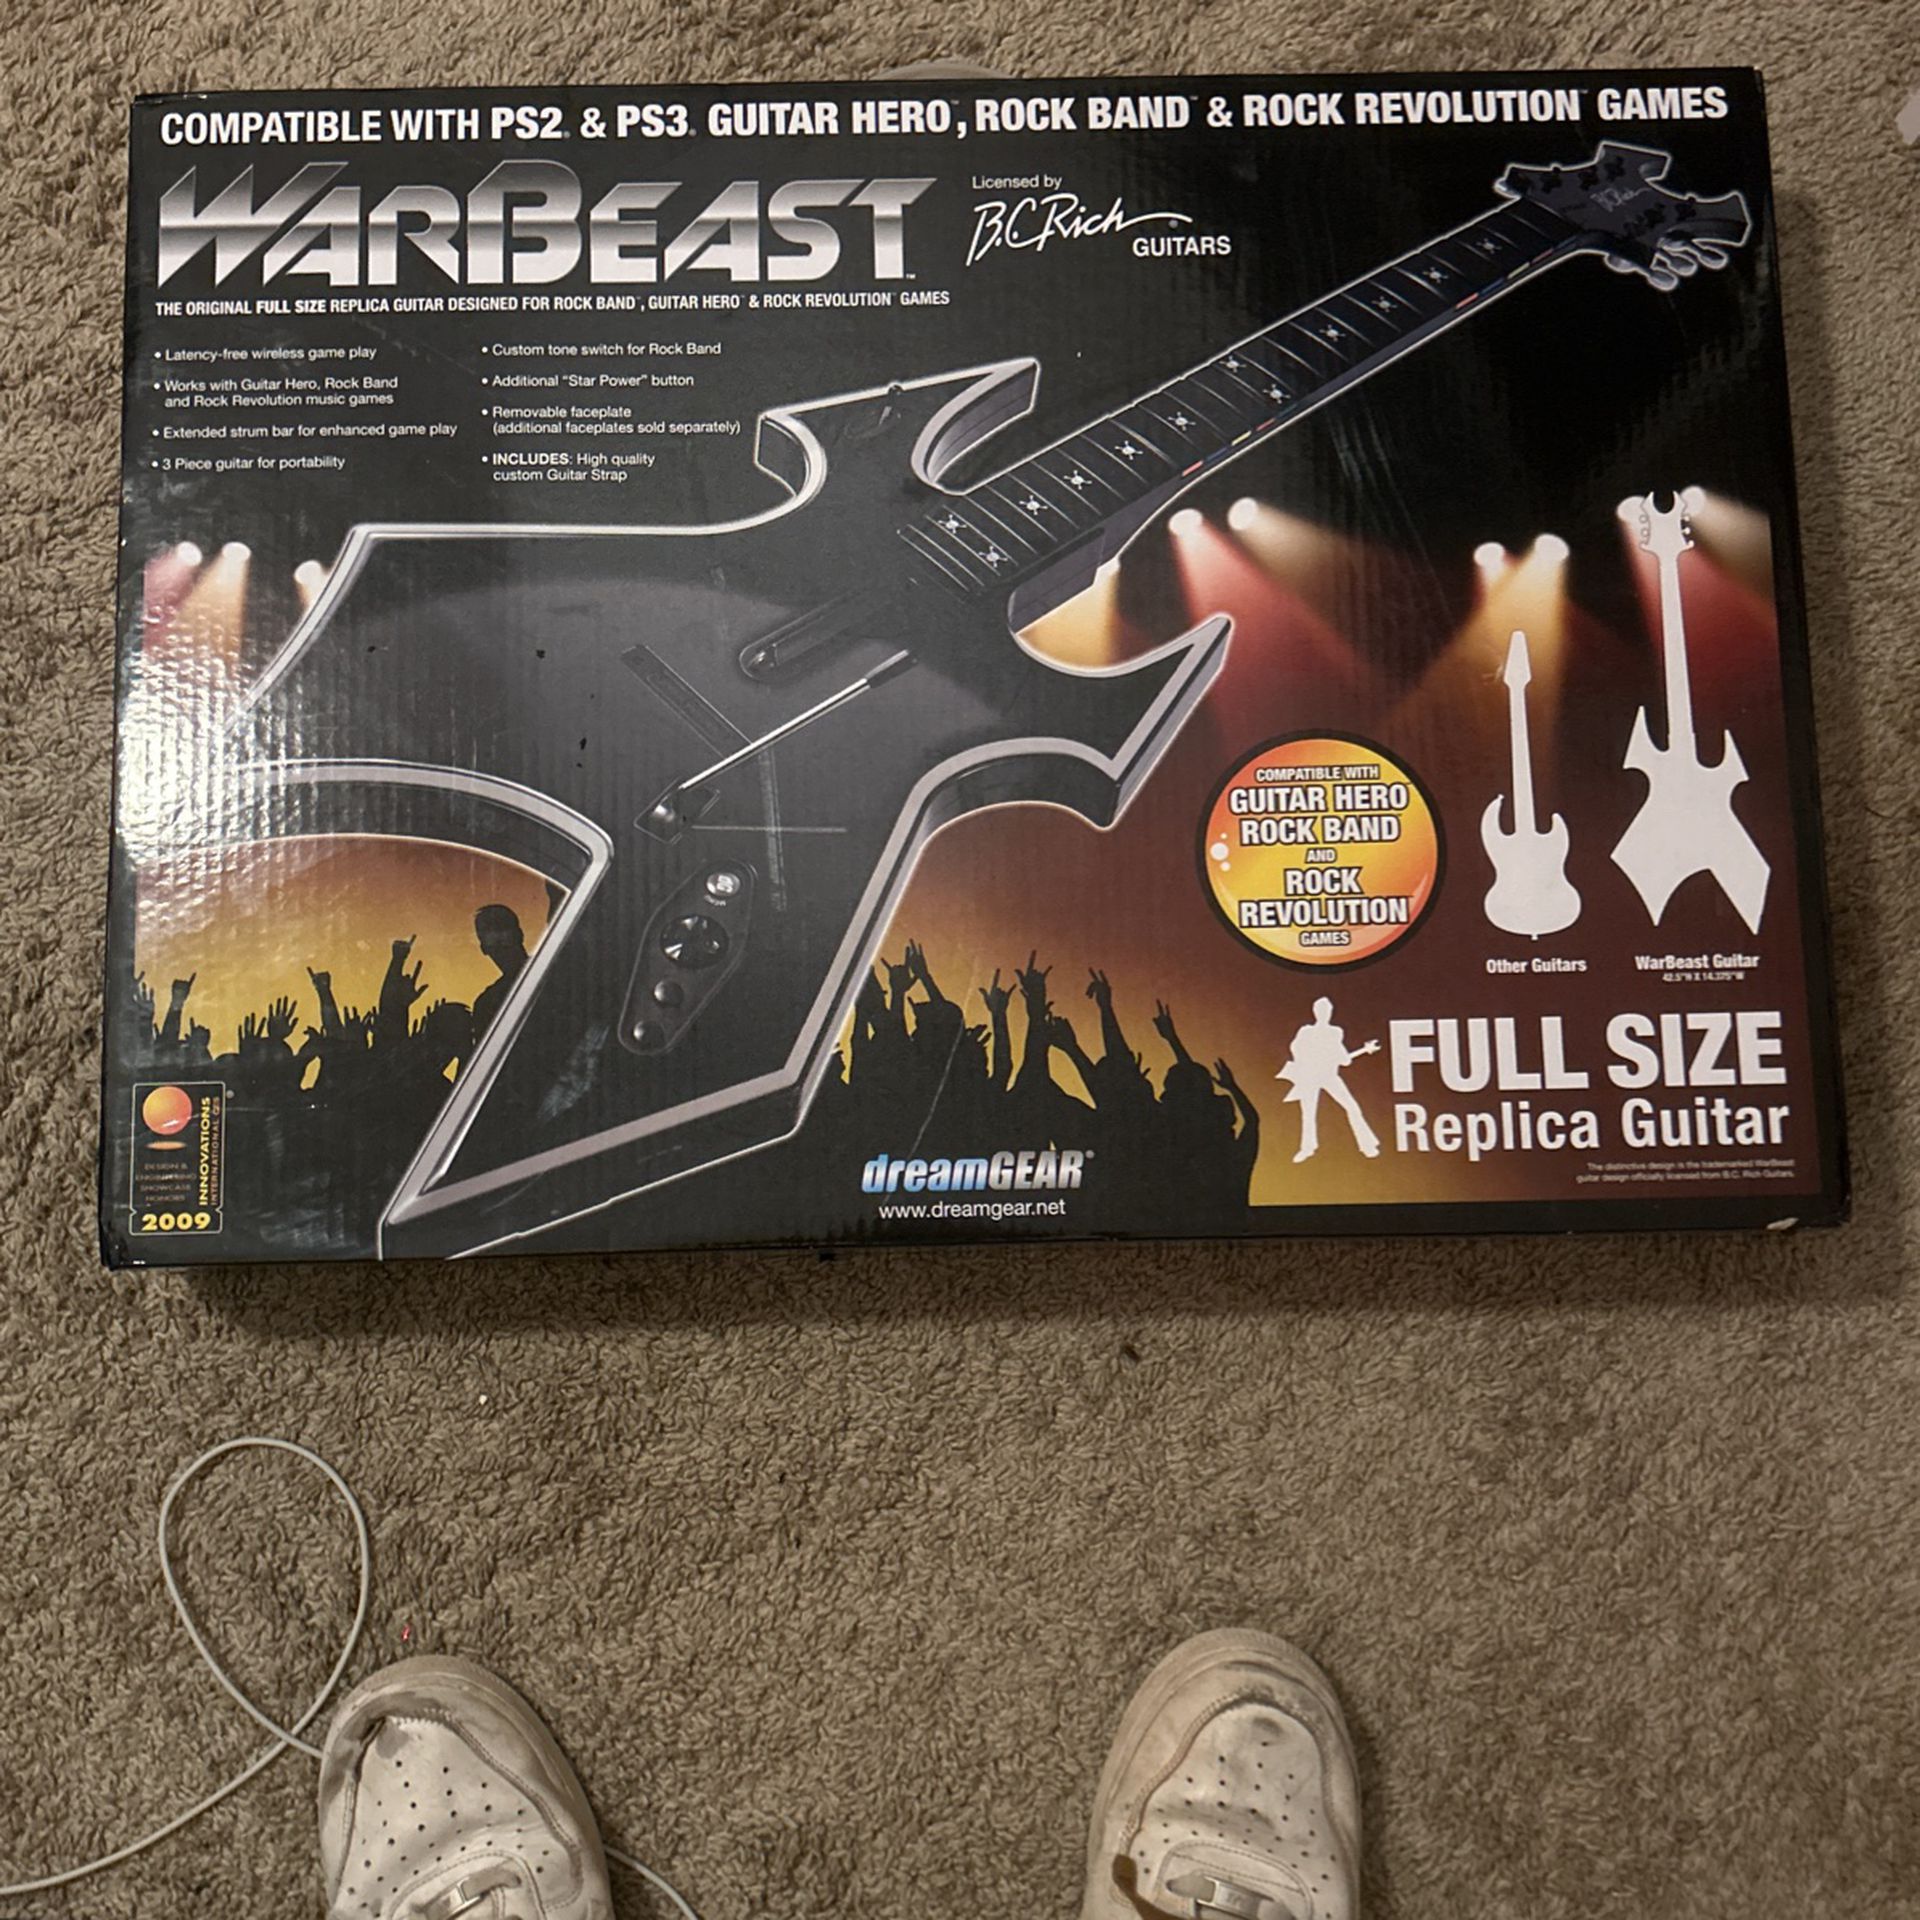 BRAND NEW: Rock band/ Guitar Hero Full-size Replica War Beast For PS3 